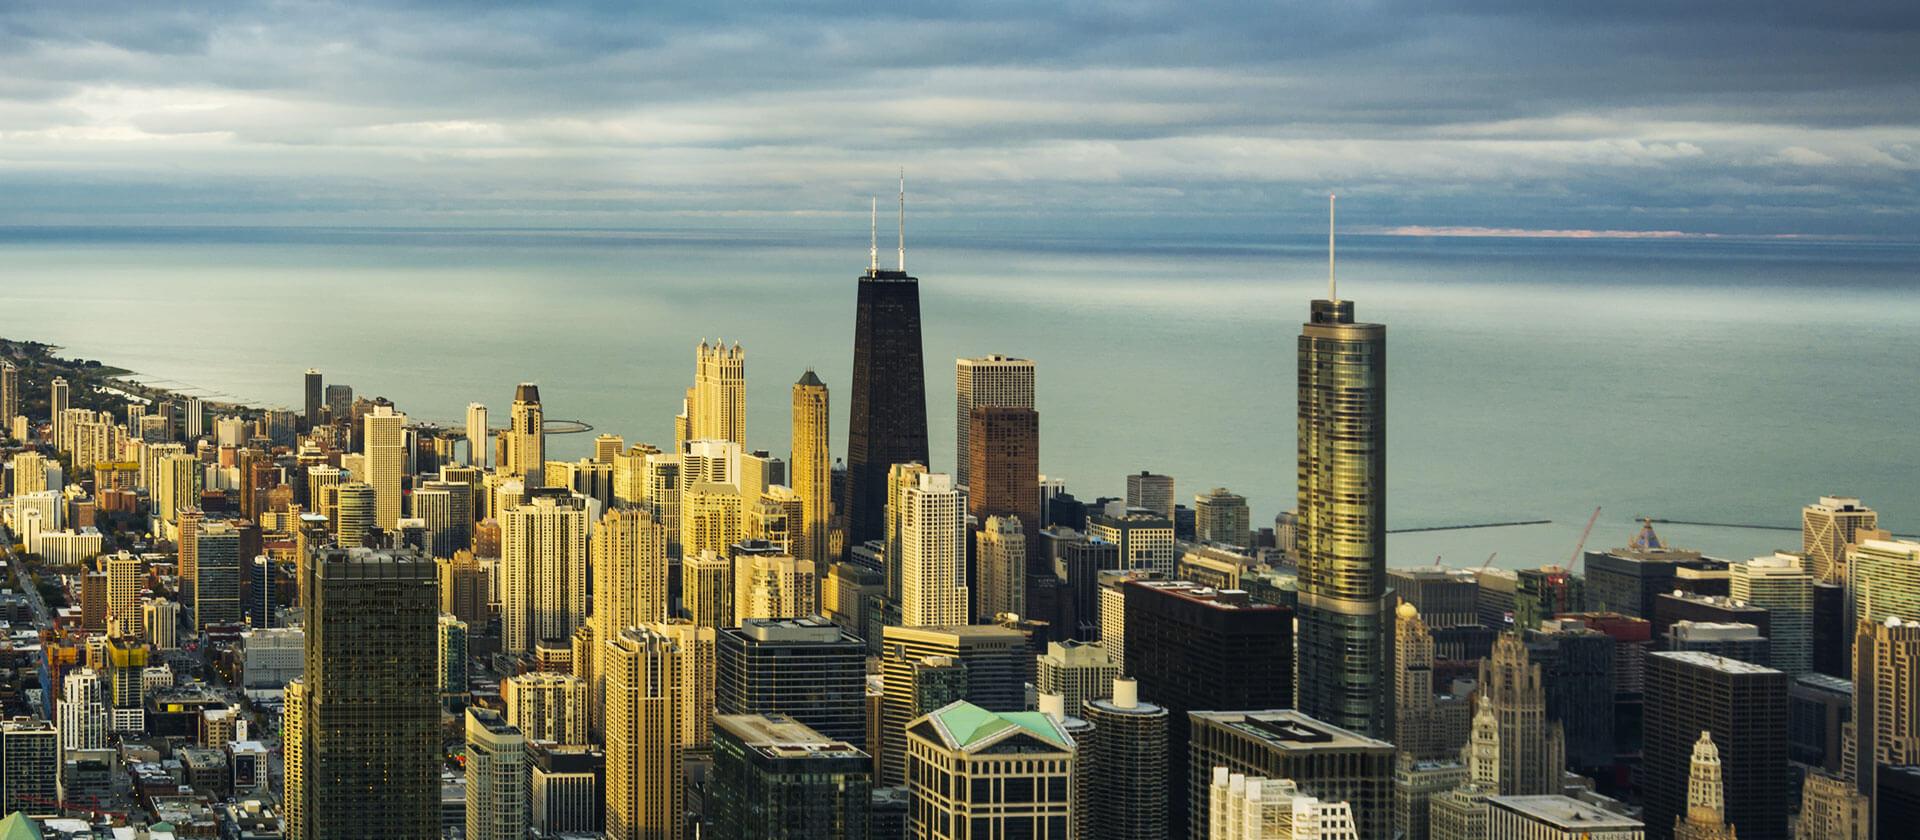 Chicago image skyline